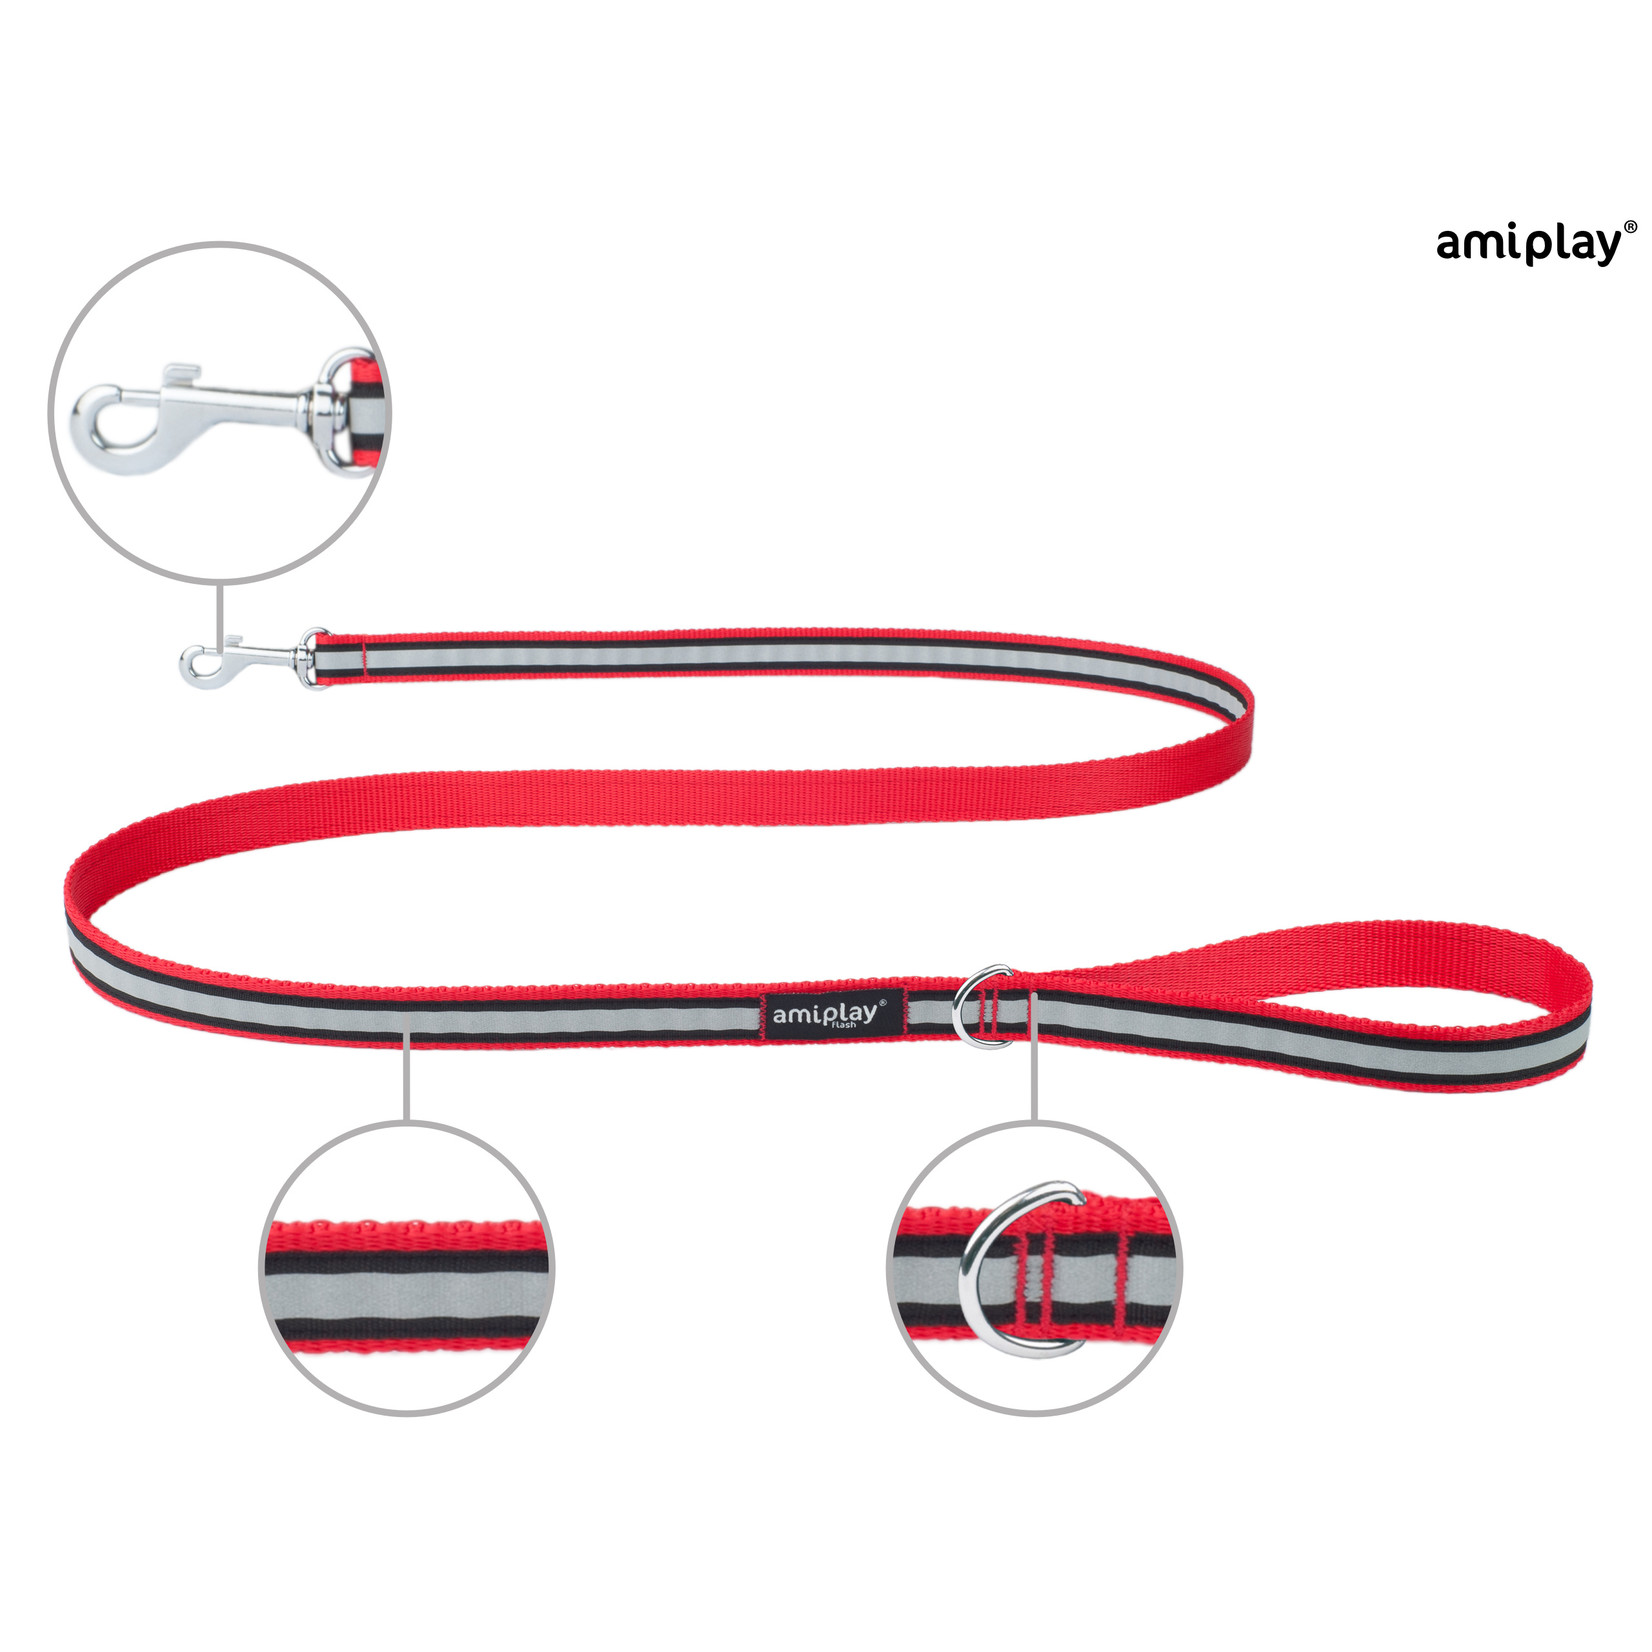 Amiplay Leiband Shine rood maat-XL / 150x2,5cm